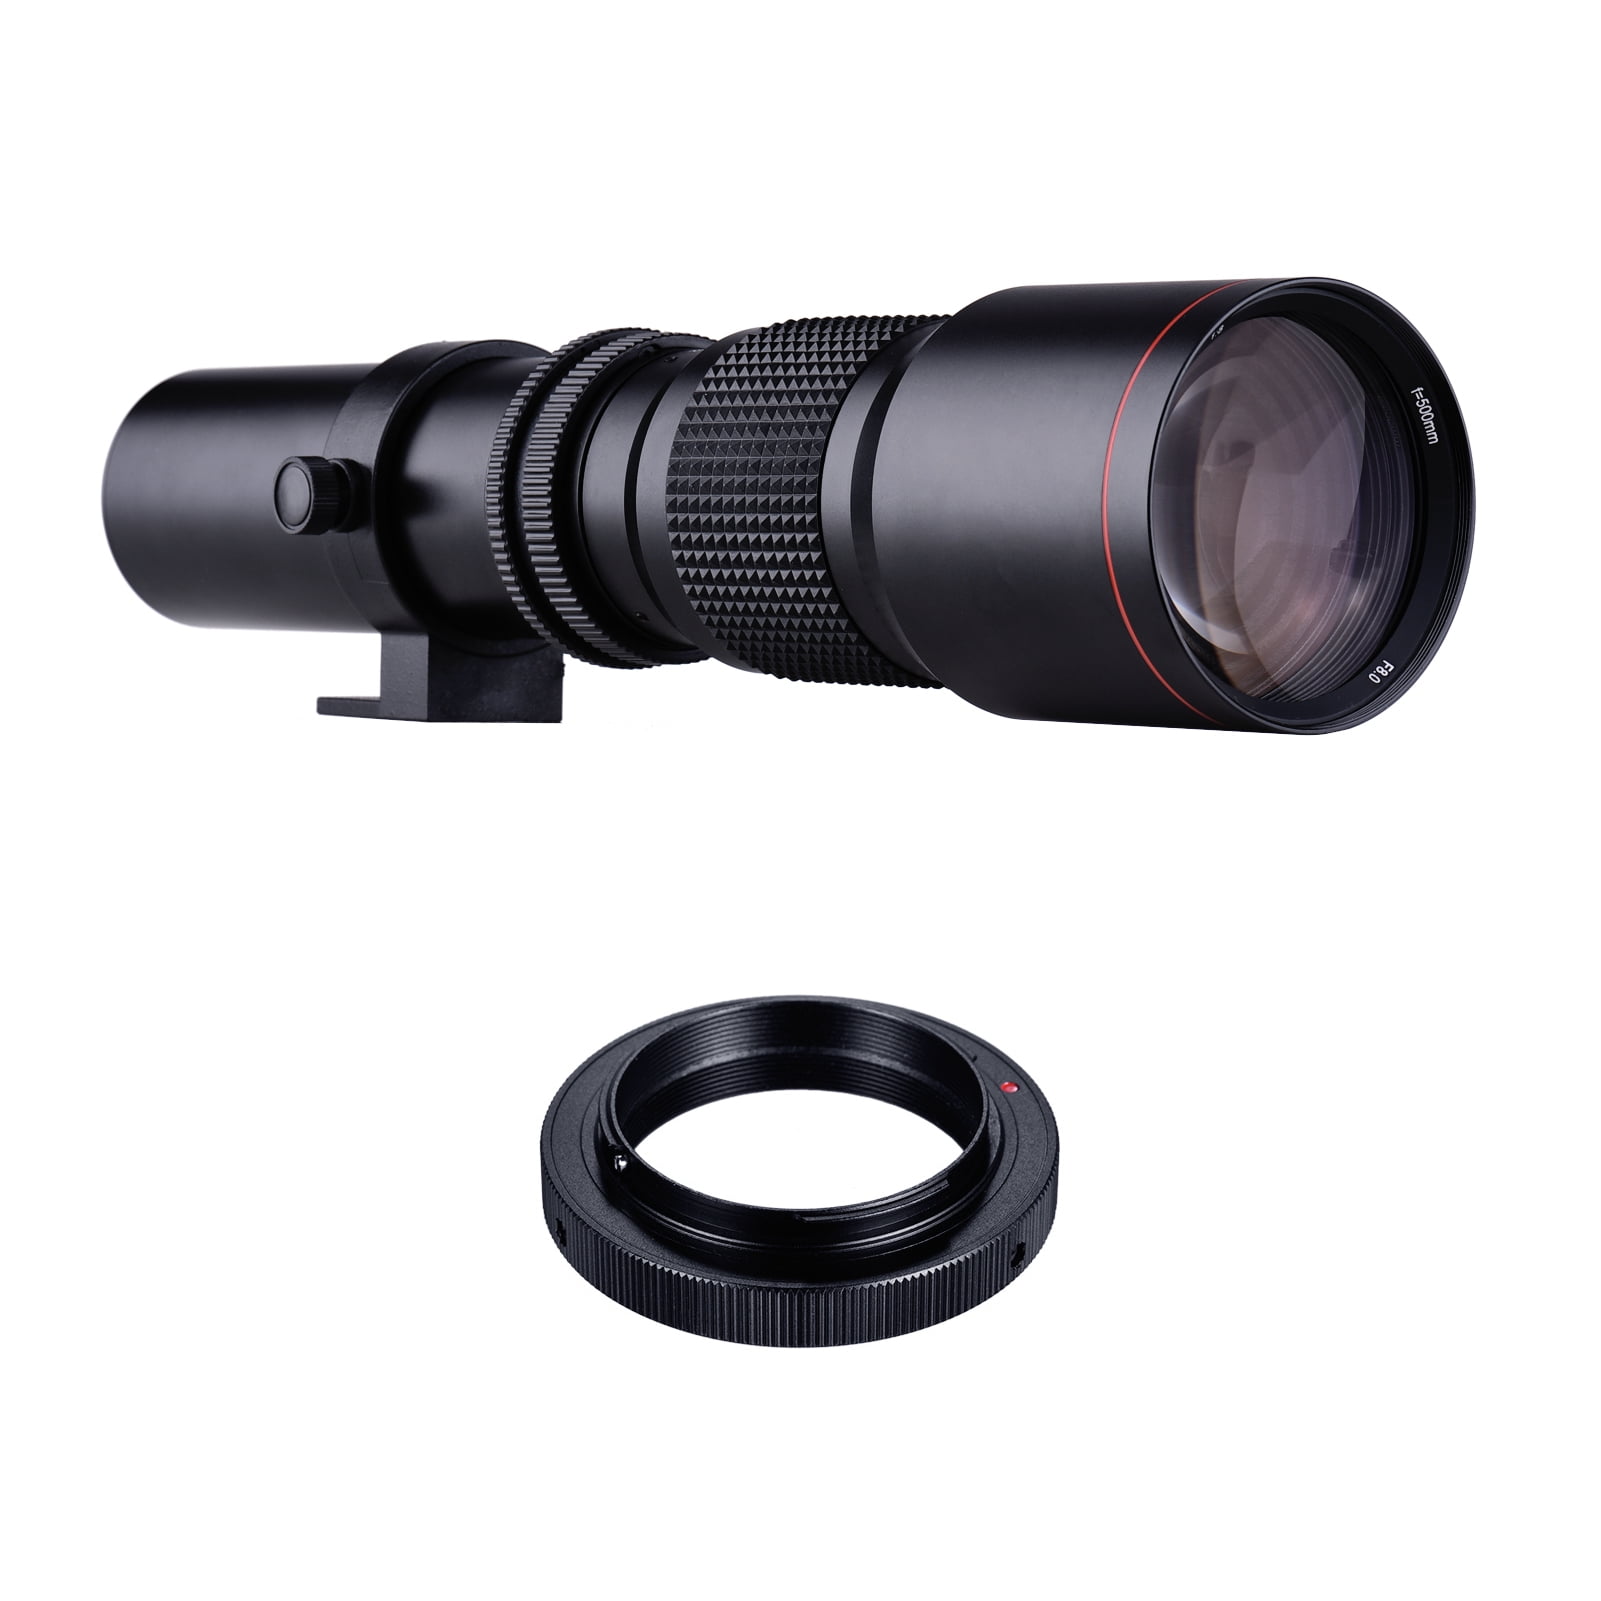 Promoten Uitdrukking Klassiek Andoer 500mm F8.0-32 Multi Coated Super Telephoto Lens Manual Zoom +  T-Mount to F-Mount Adapter Ring Kit Replacement for Nikon D3300 D3400 D3500  D5300 D5500 D5600 D610 D700 D7000 D7100 D7200 D750